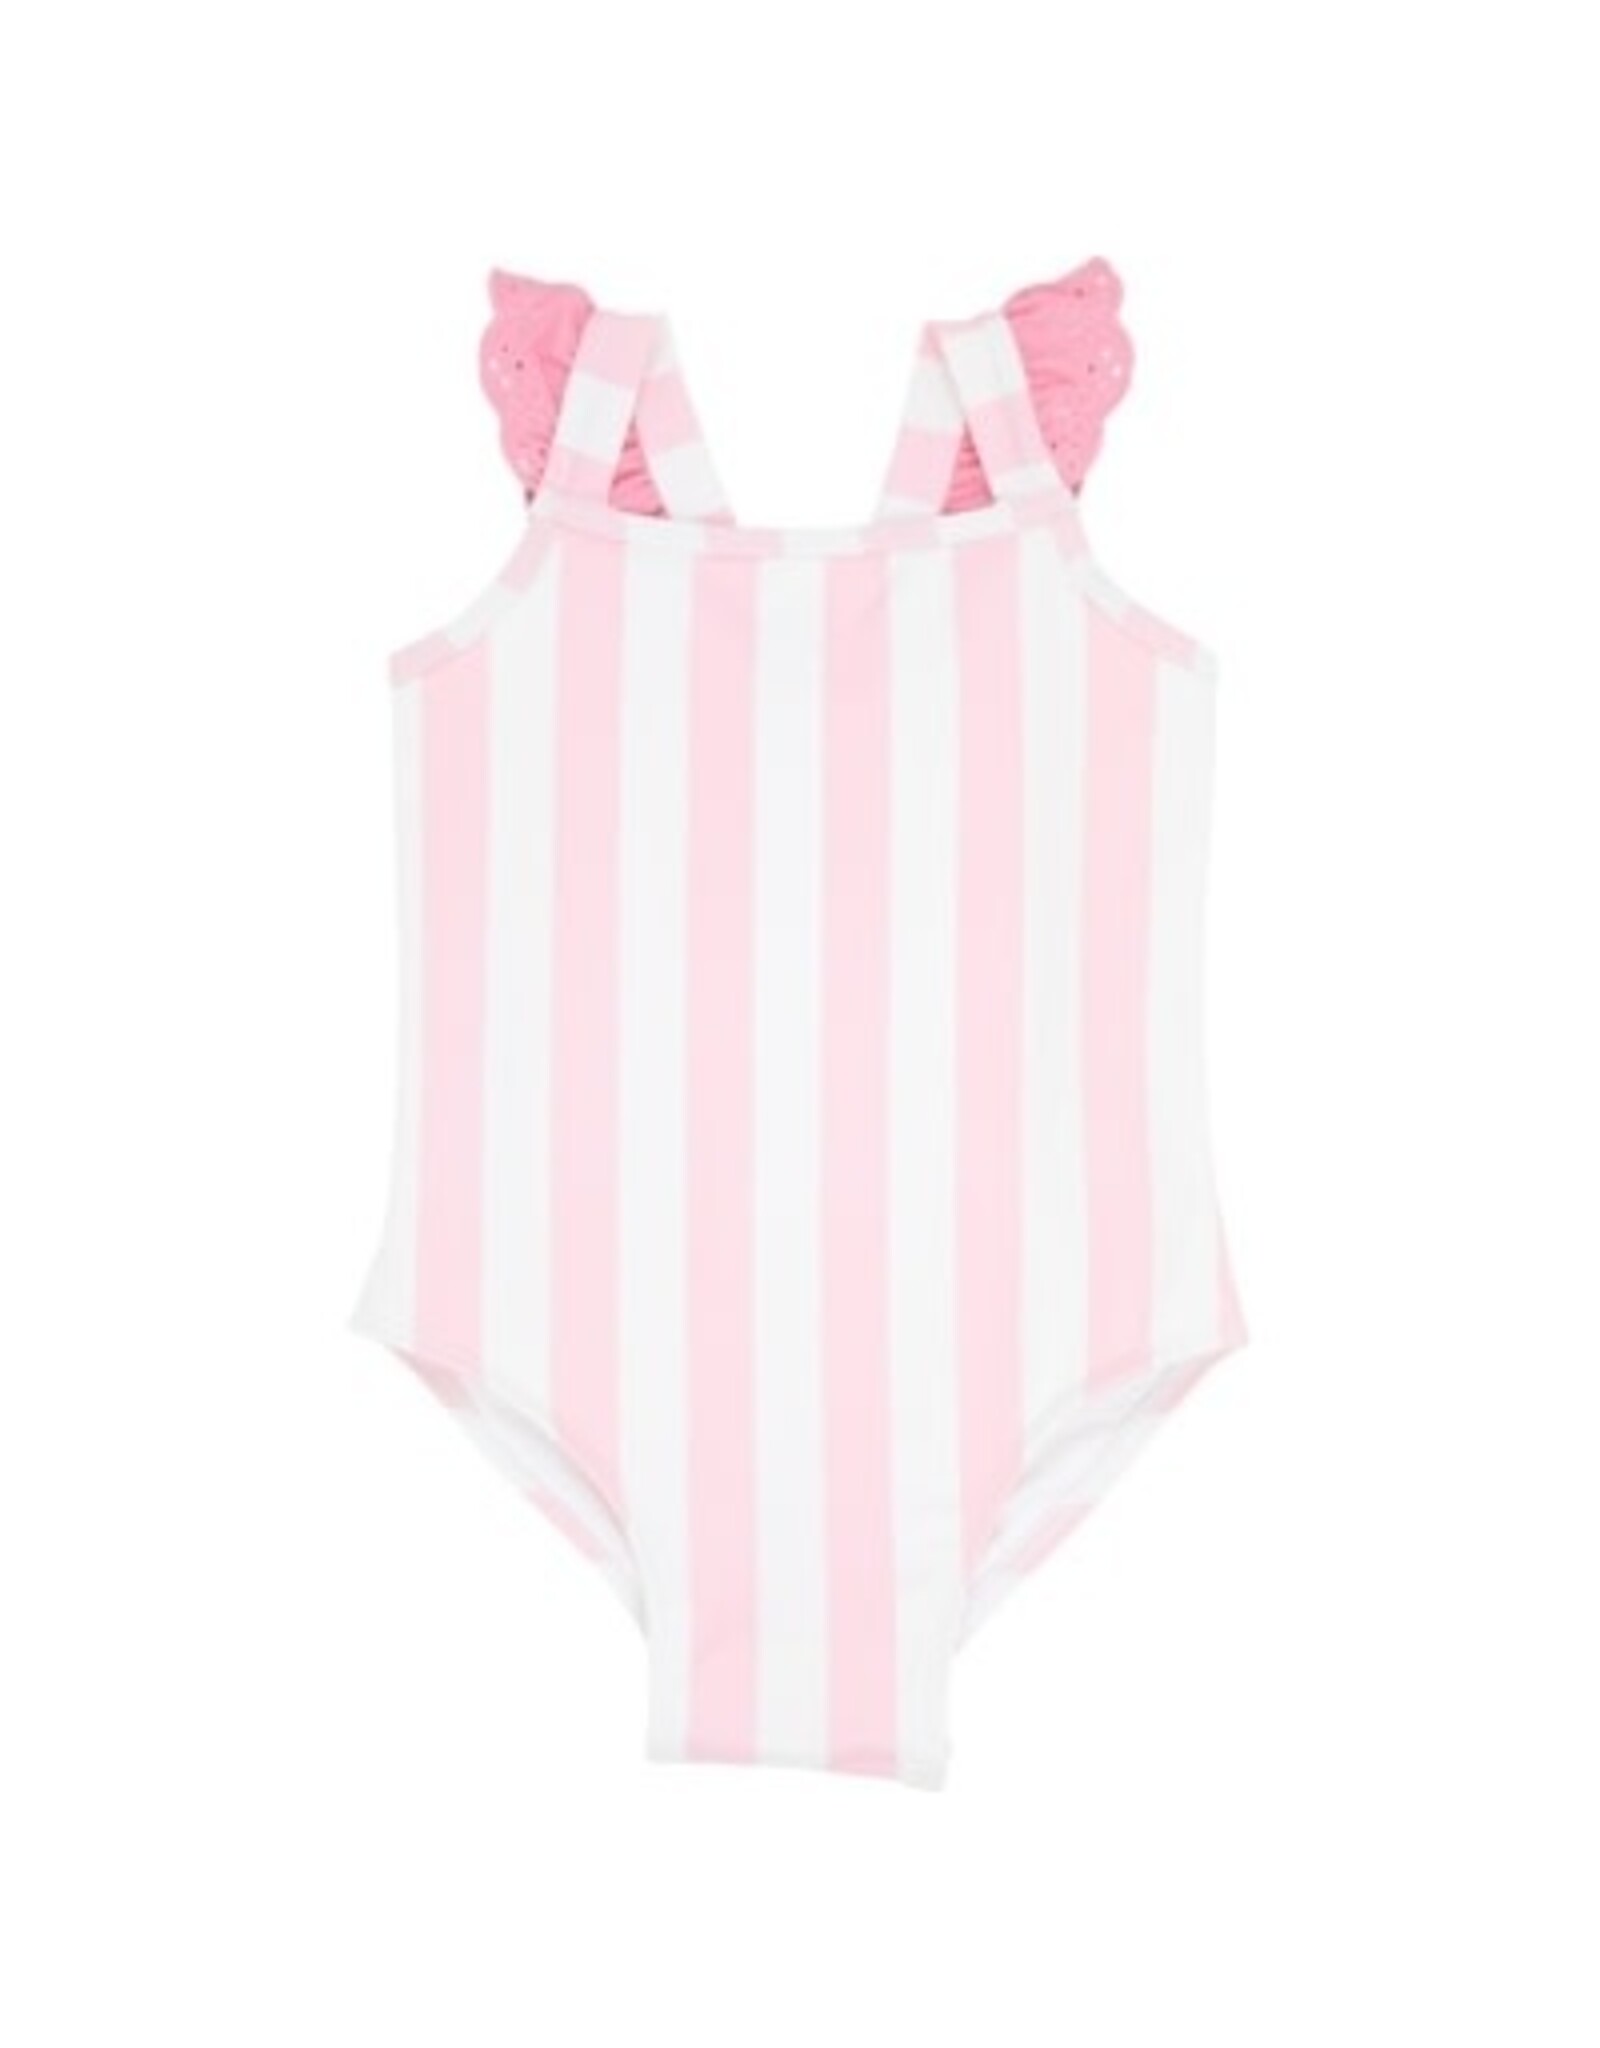 The Beaufort Bonnet Company Long Bay Bathing Suit Caicos Cabana Stripe/Hamptons Hot Pink